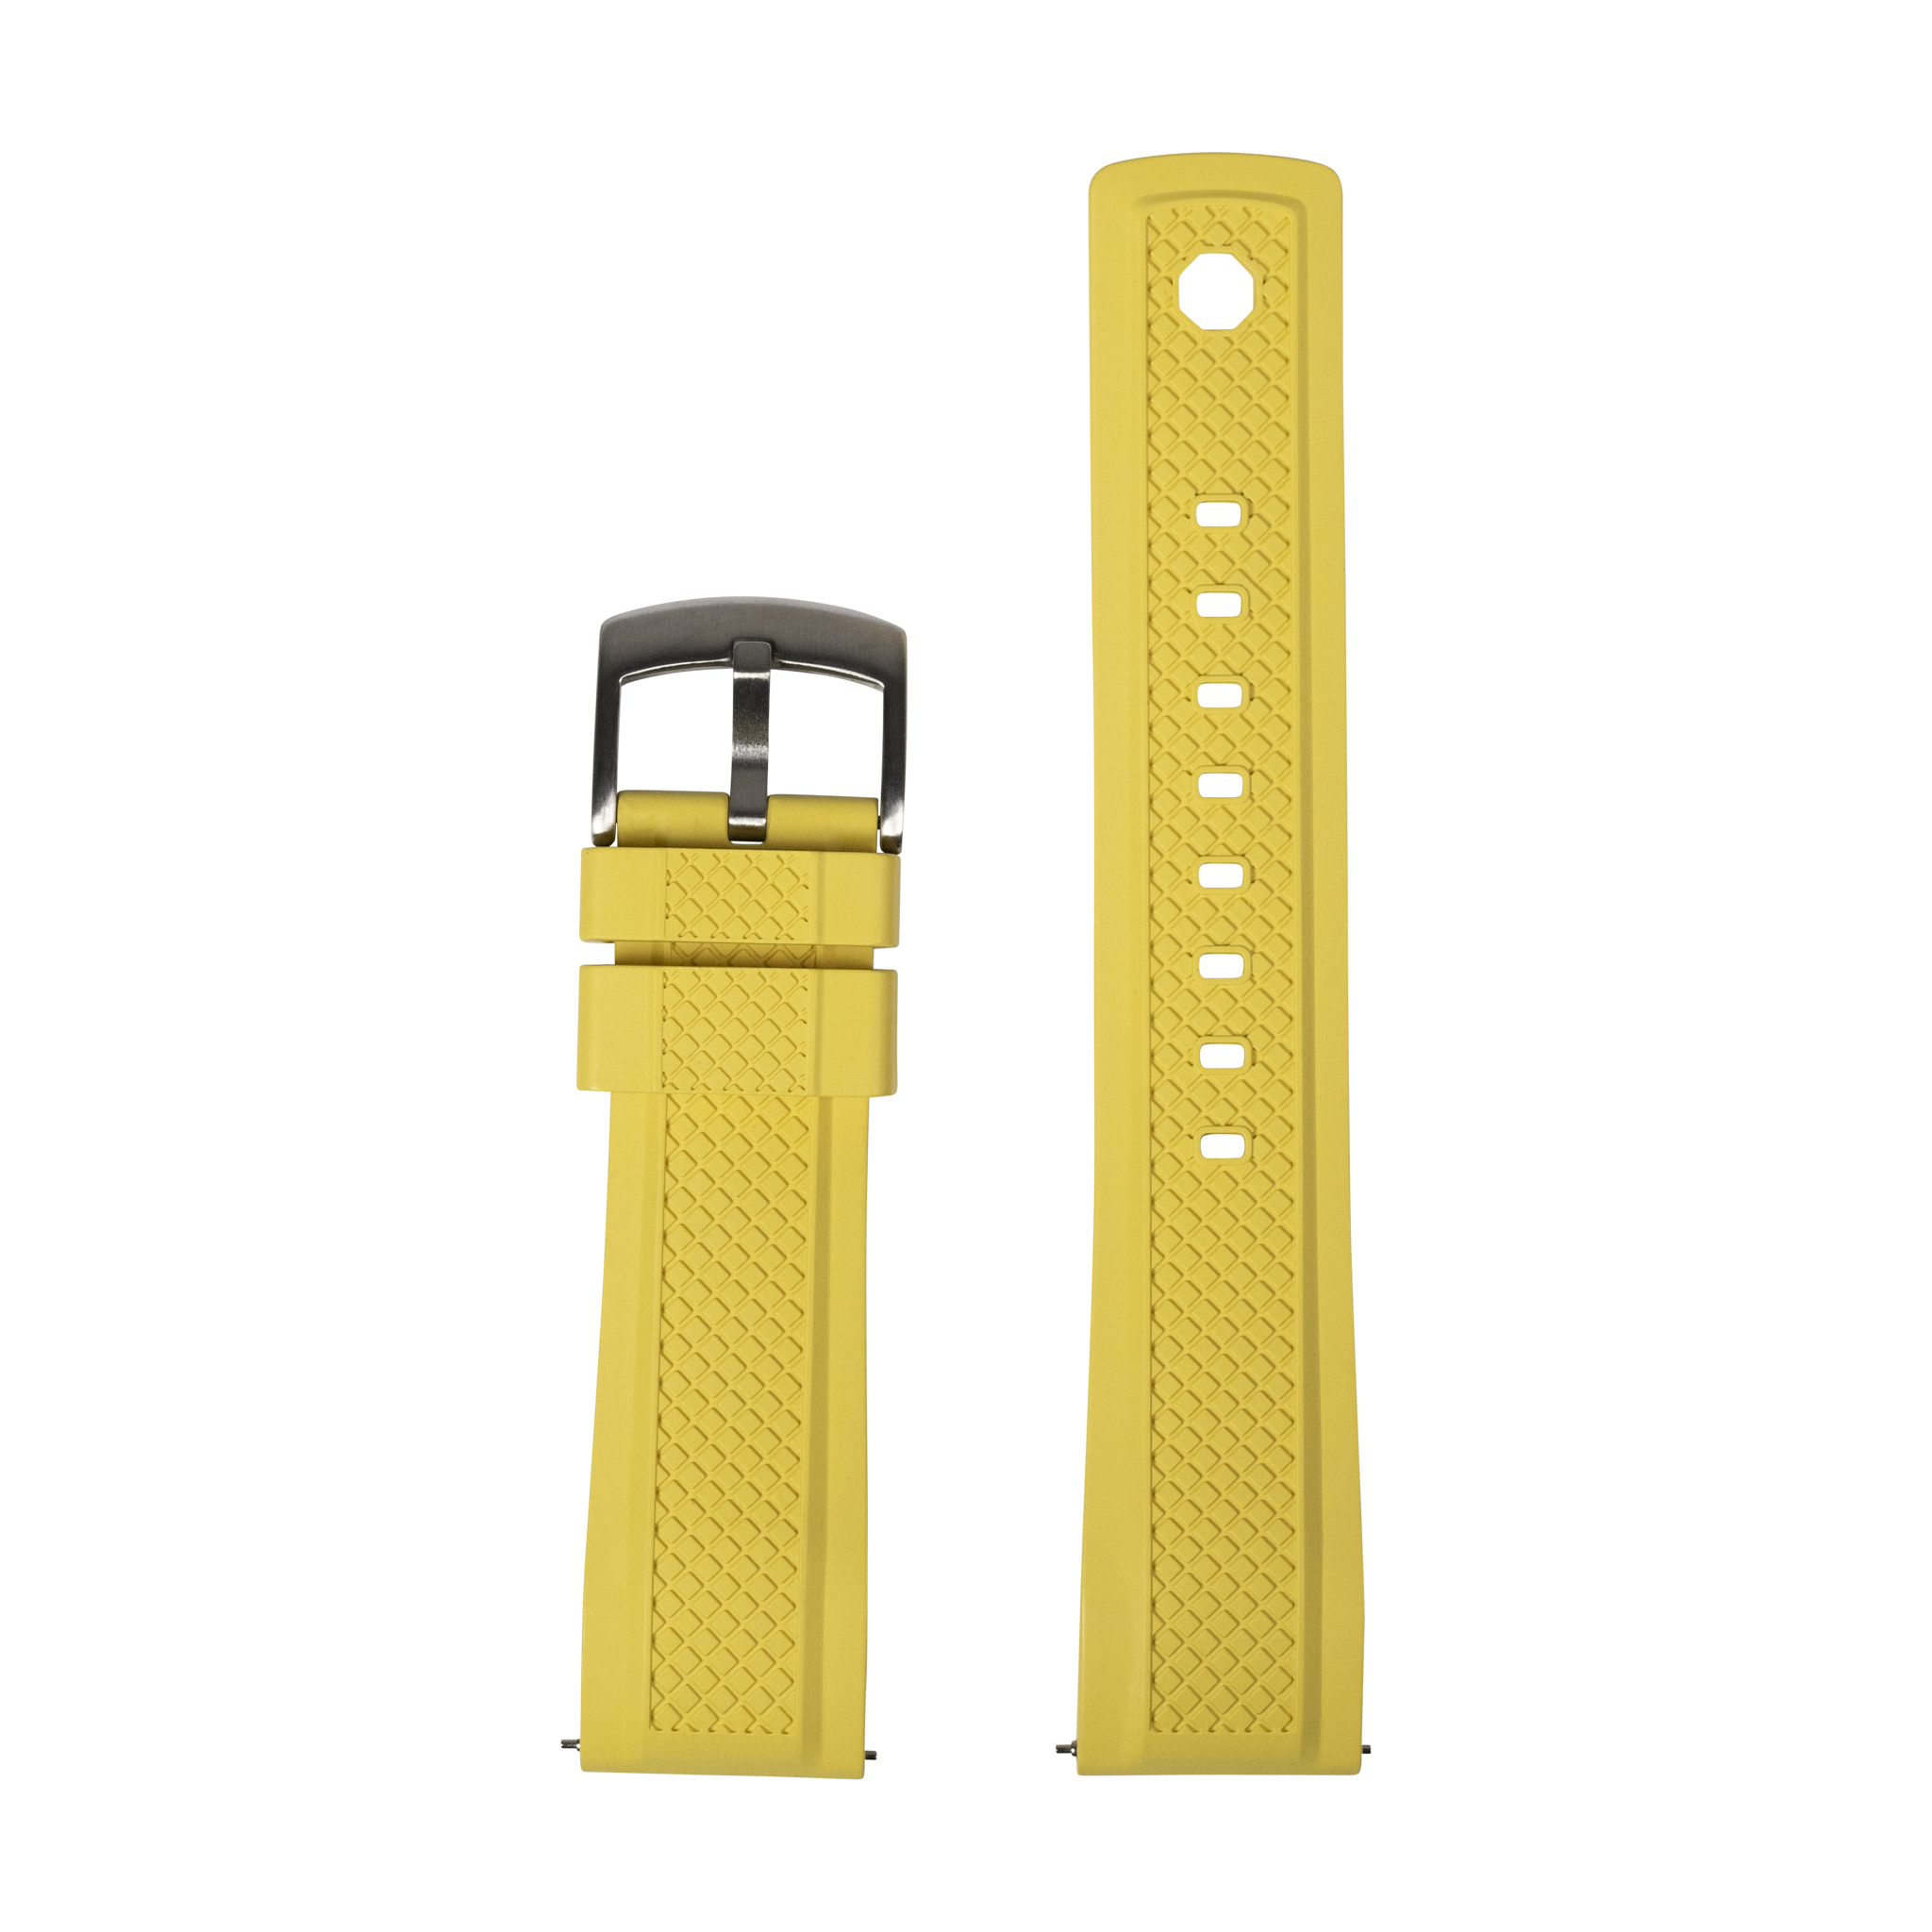 [QuickFit] GridLock FKM Rubber - Yellow 26mm